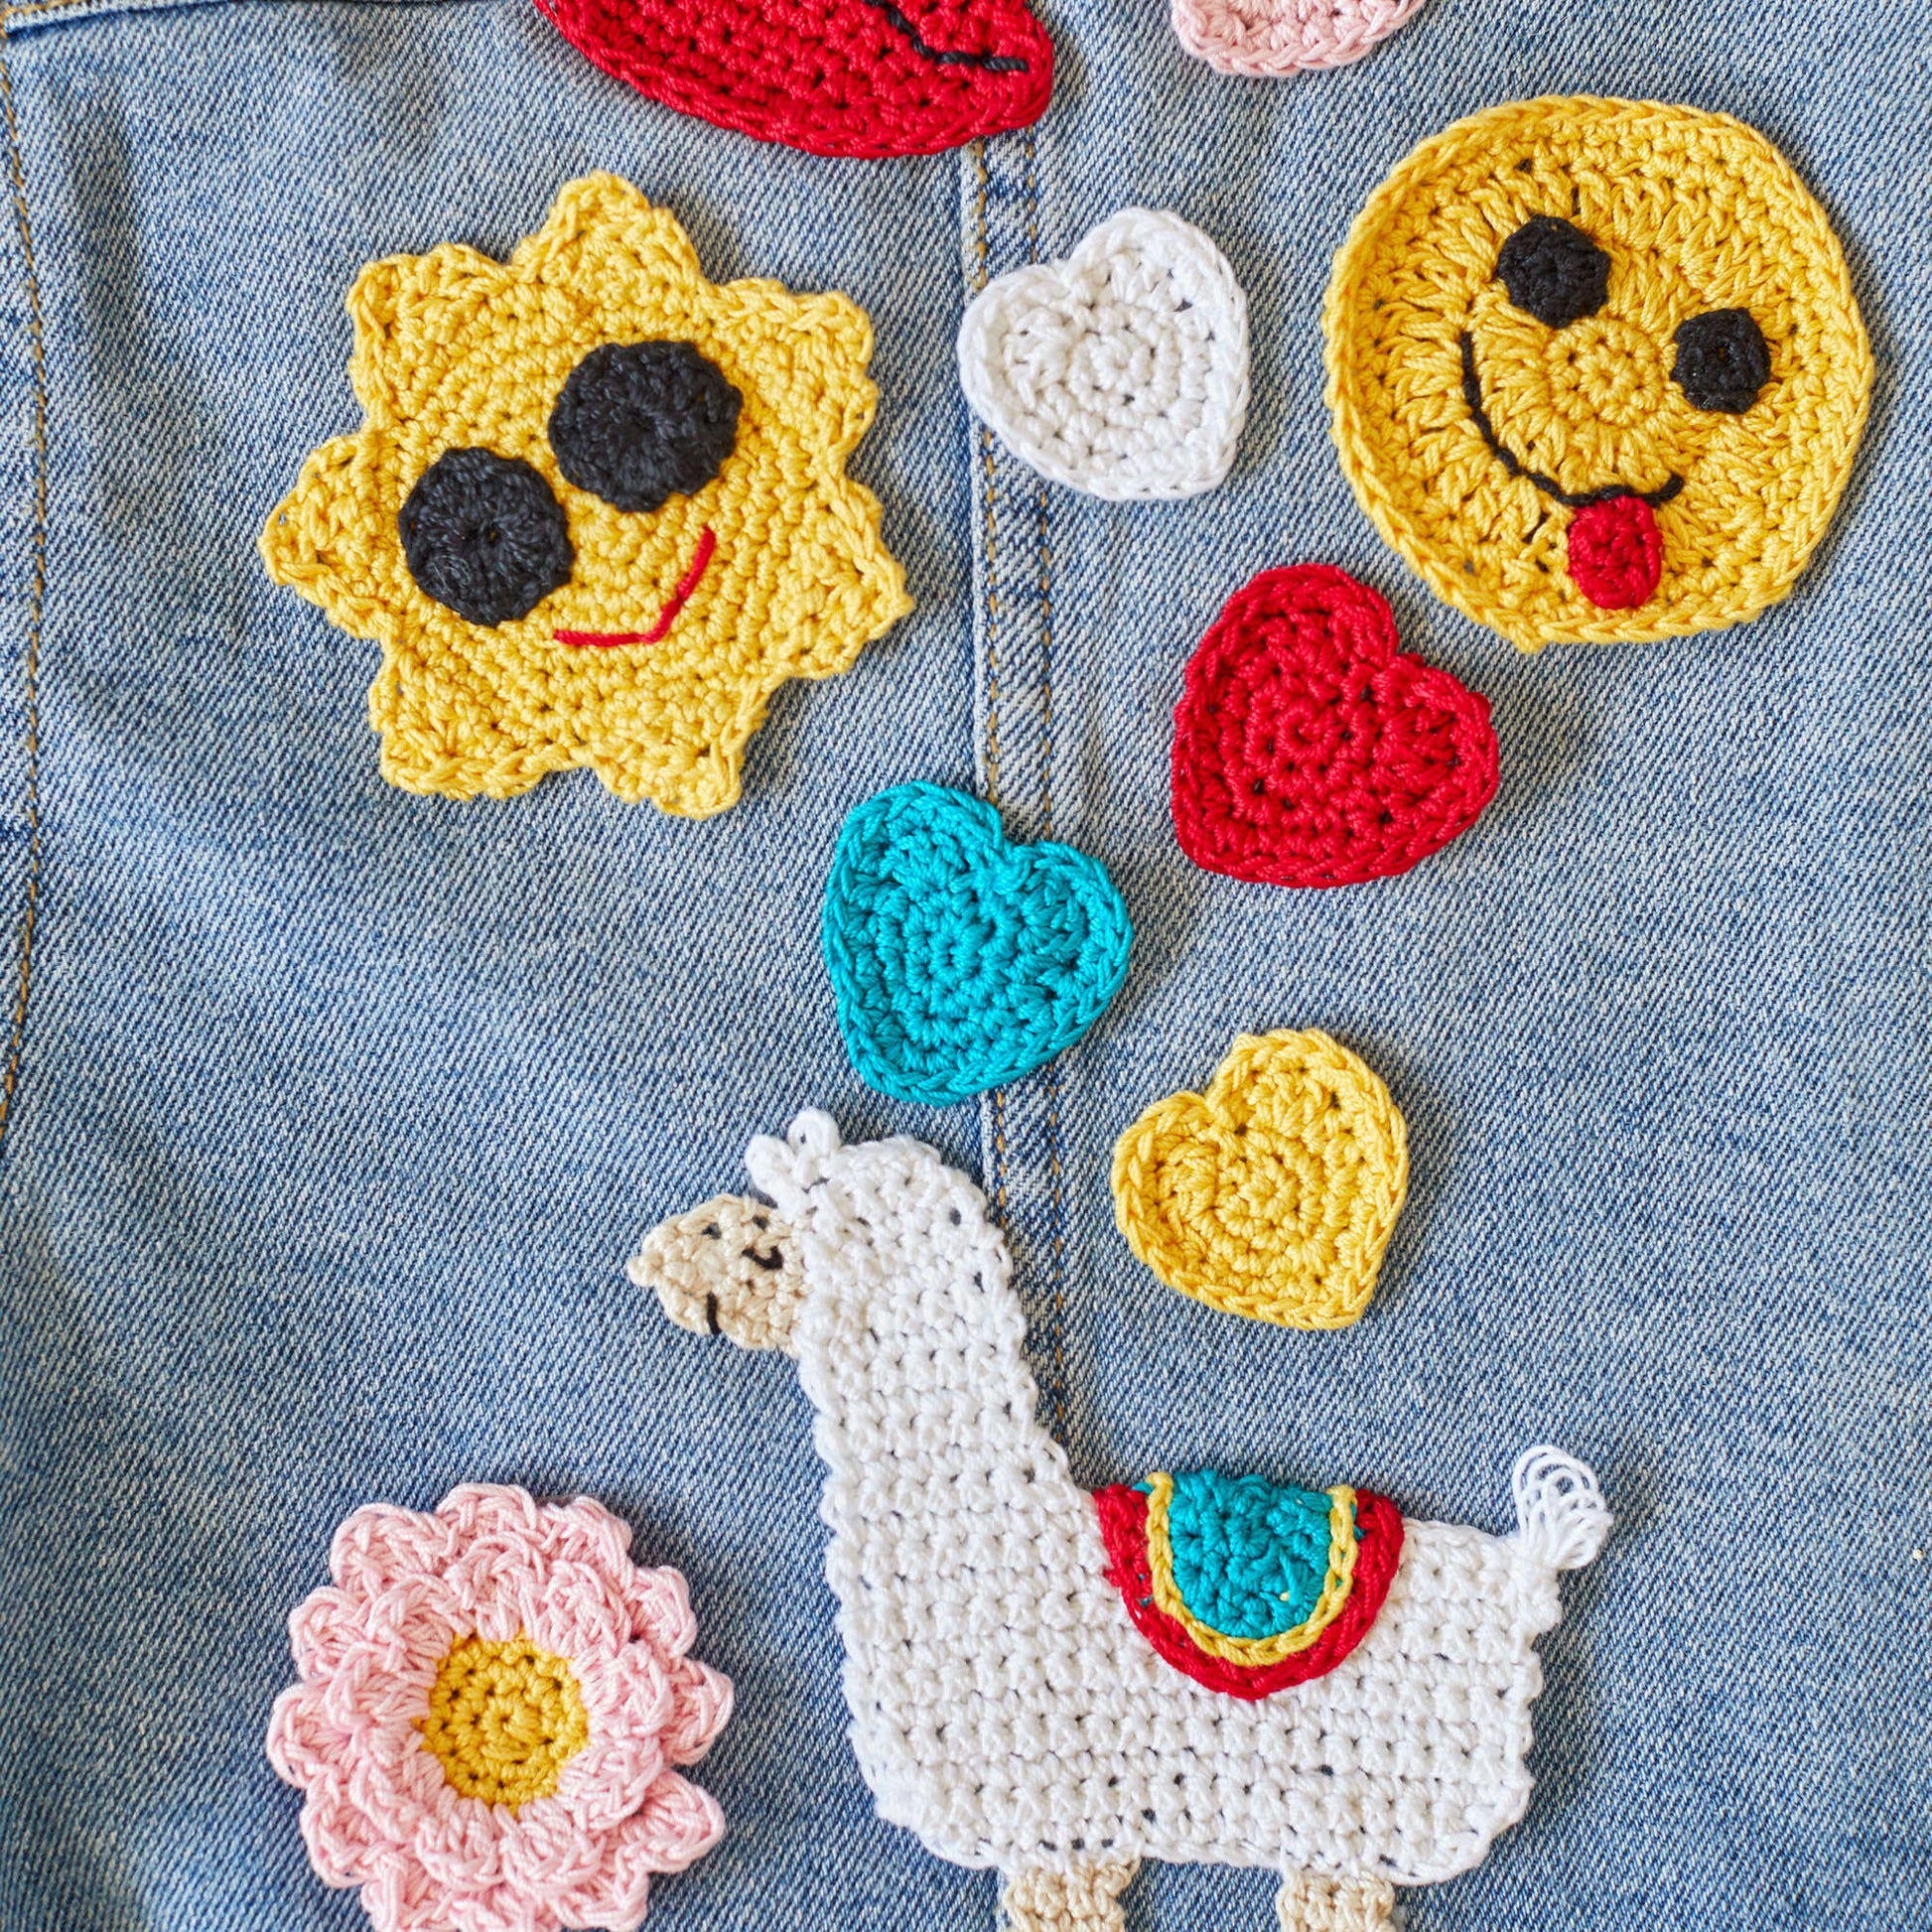 Free Aunt Lydia's Crochet Friendship Hearts Applique Pattern